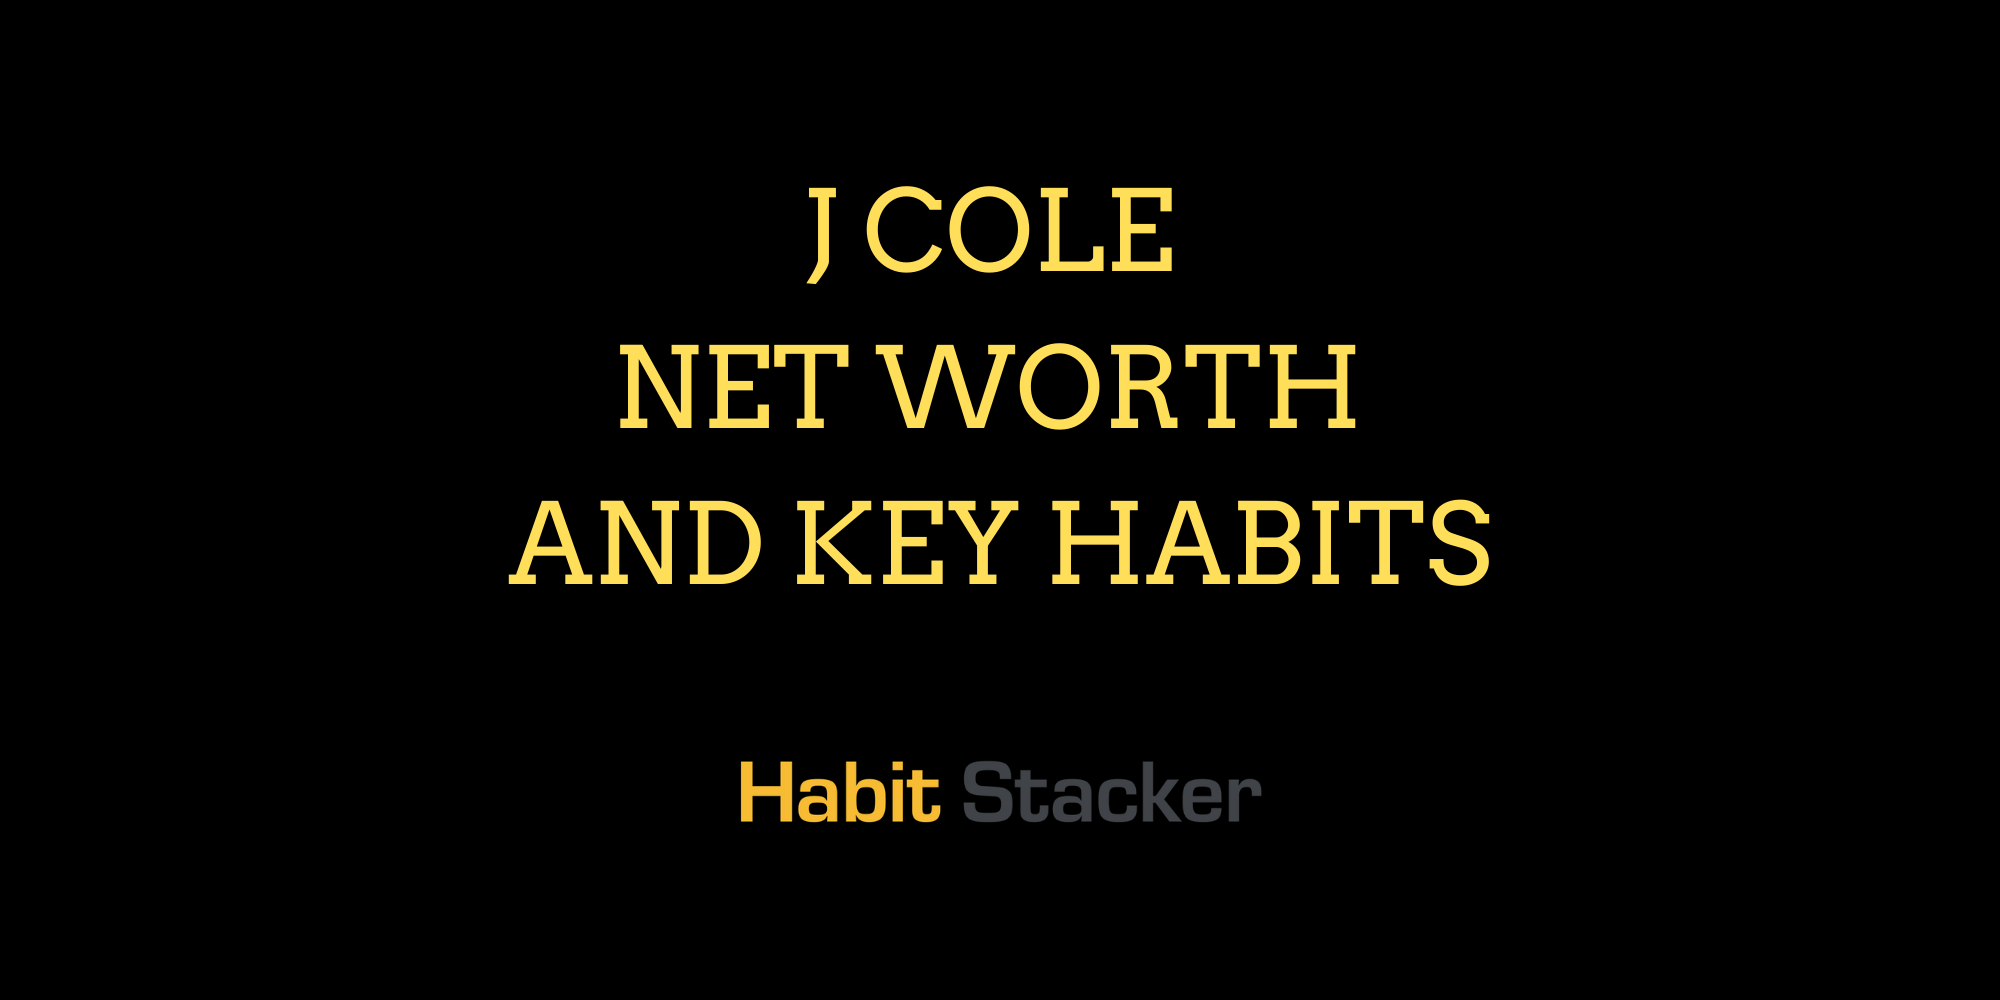 J Cole Net Worth and Key Habits